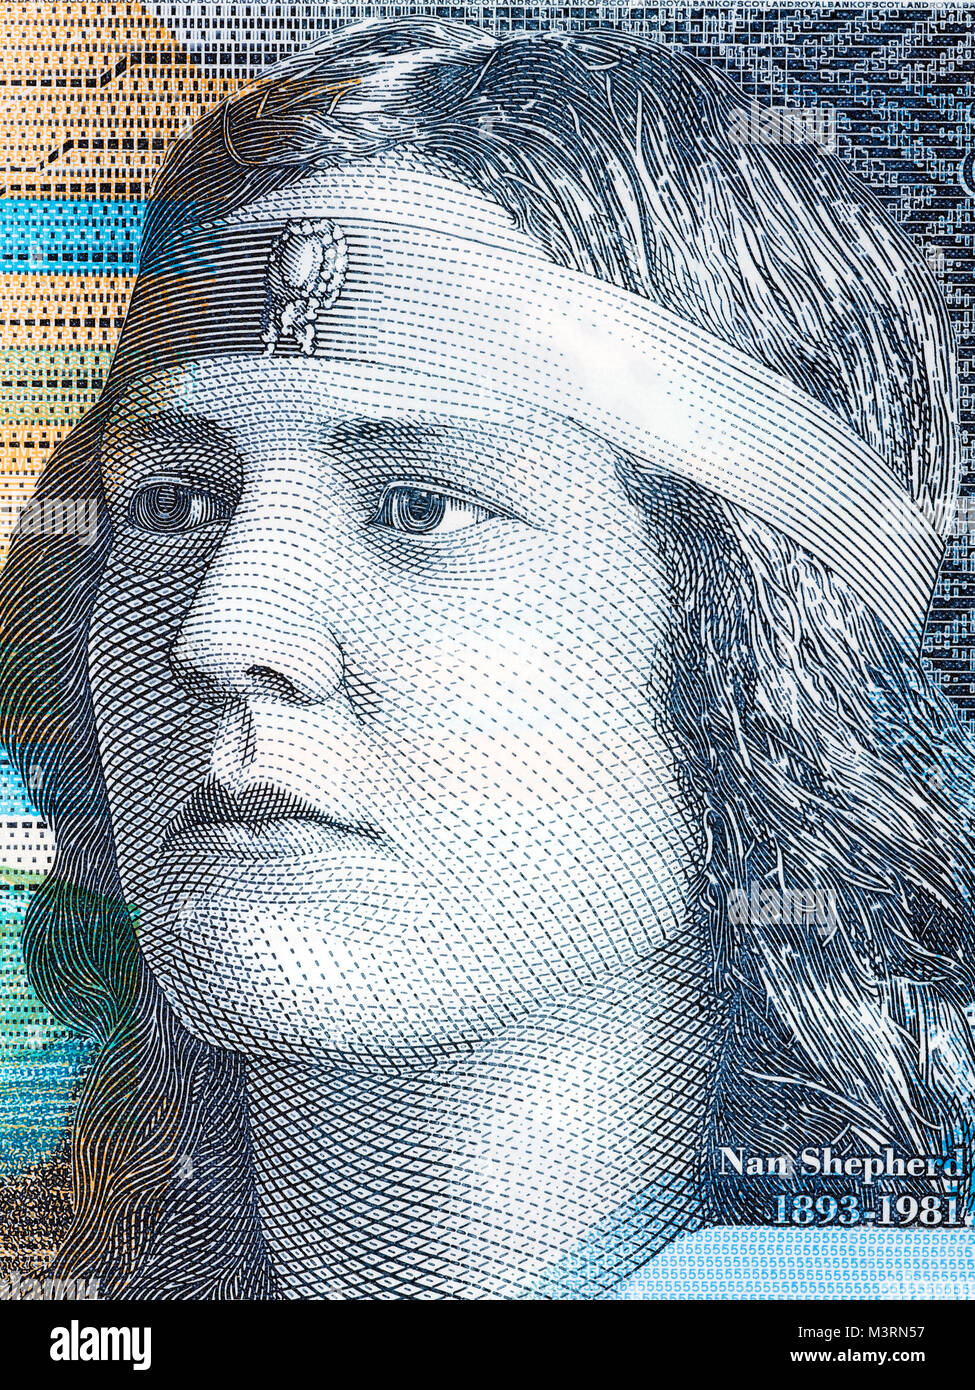 Nan Shepherd portrait from Scottish money Stock Photo